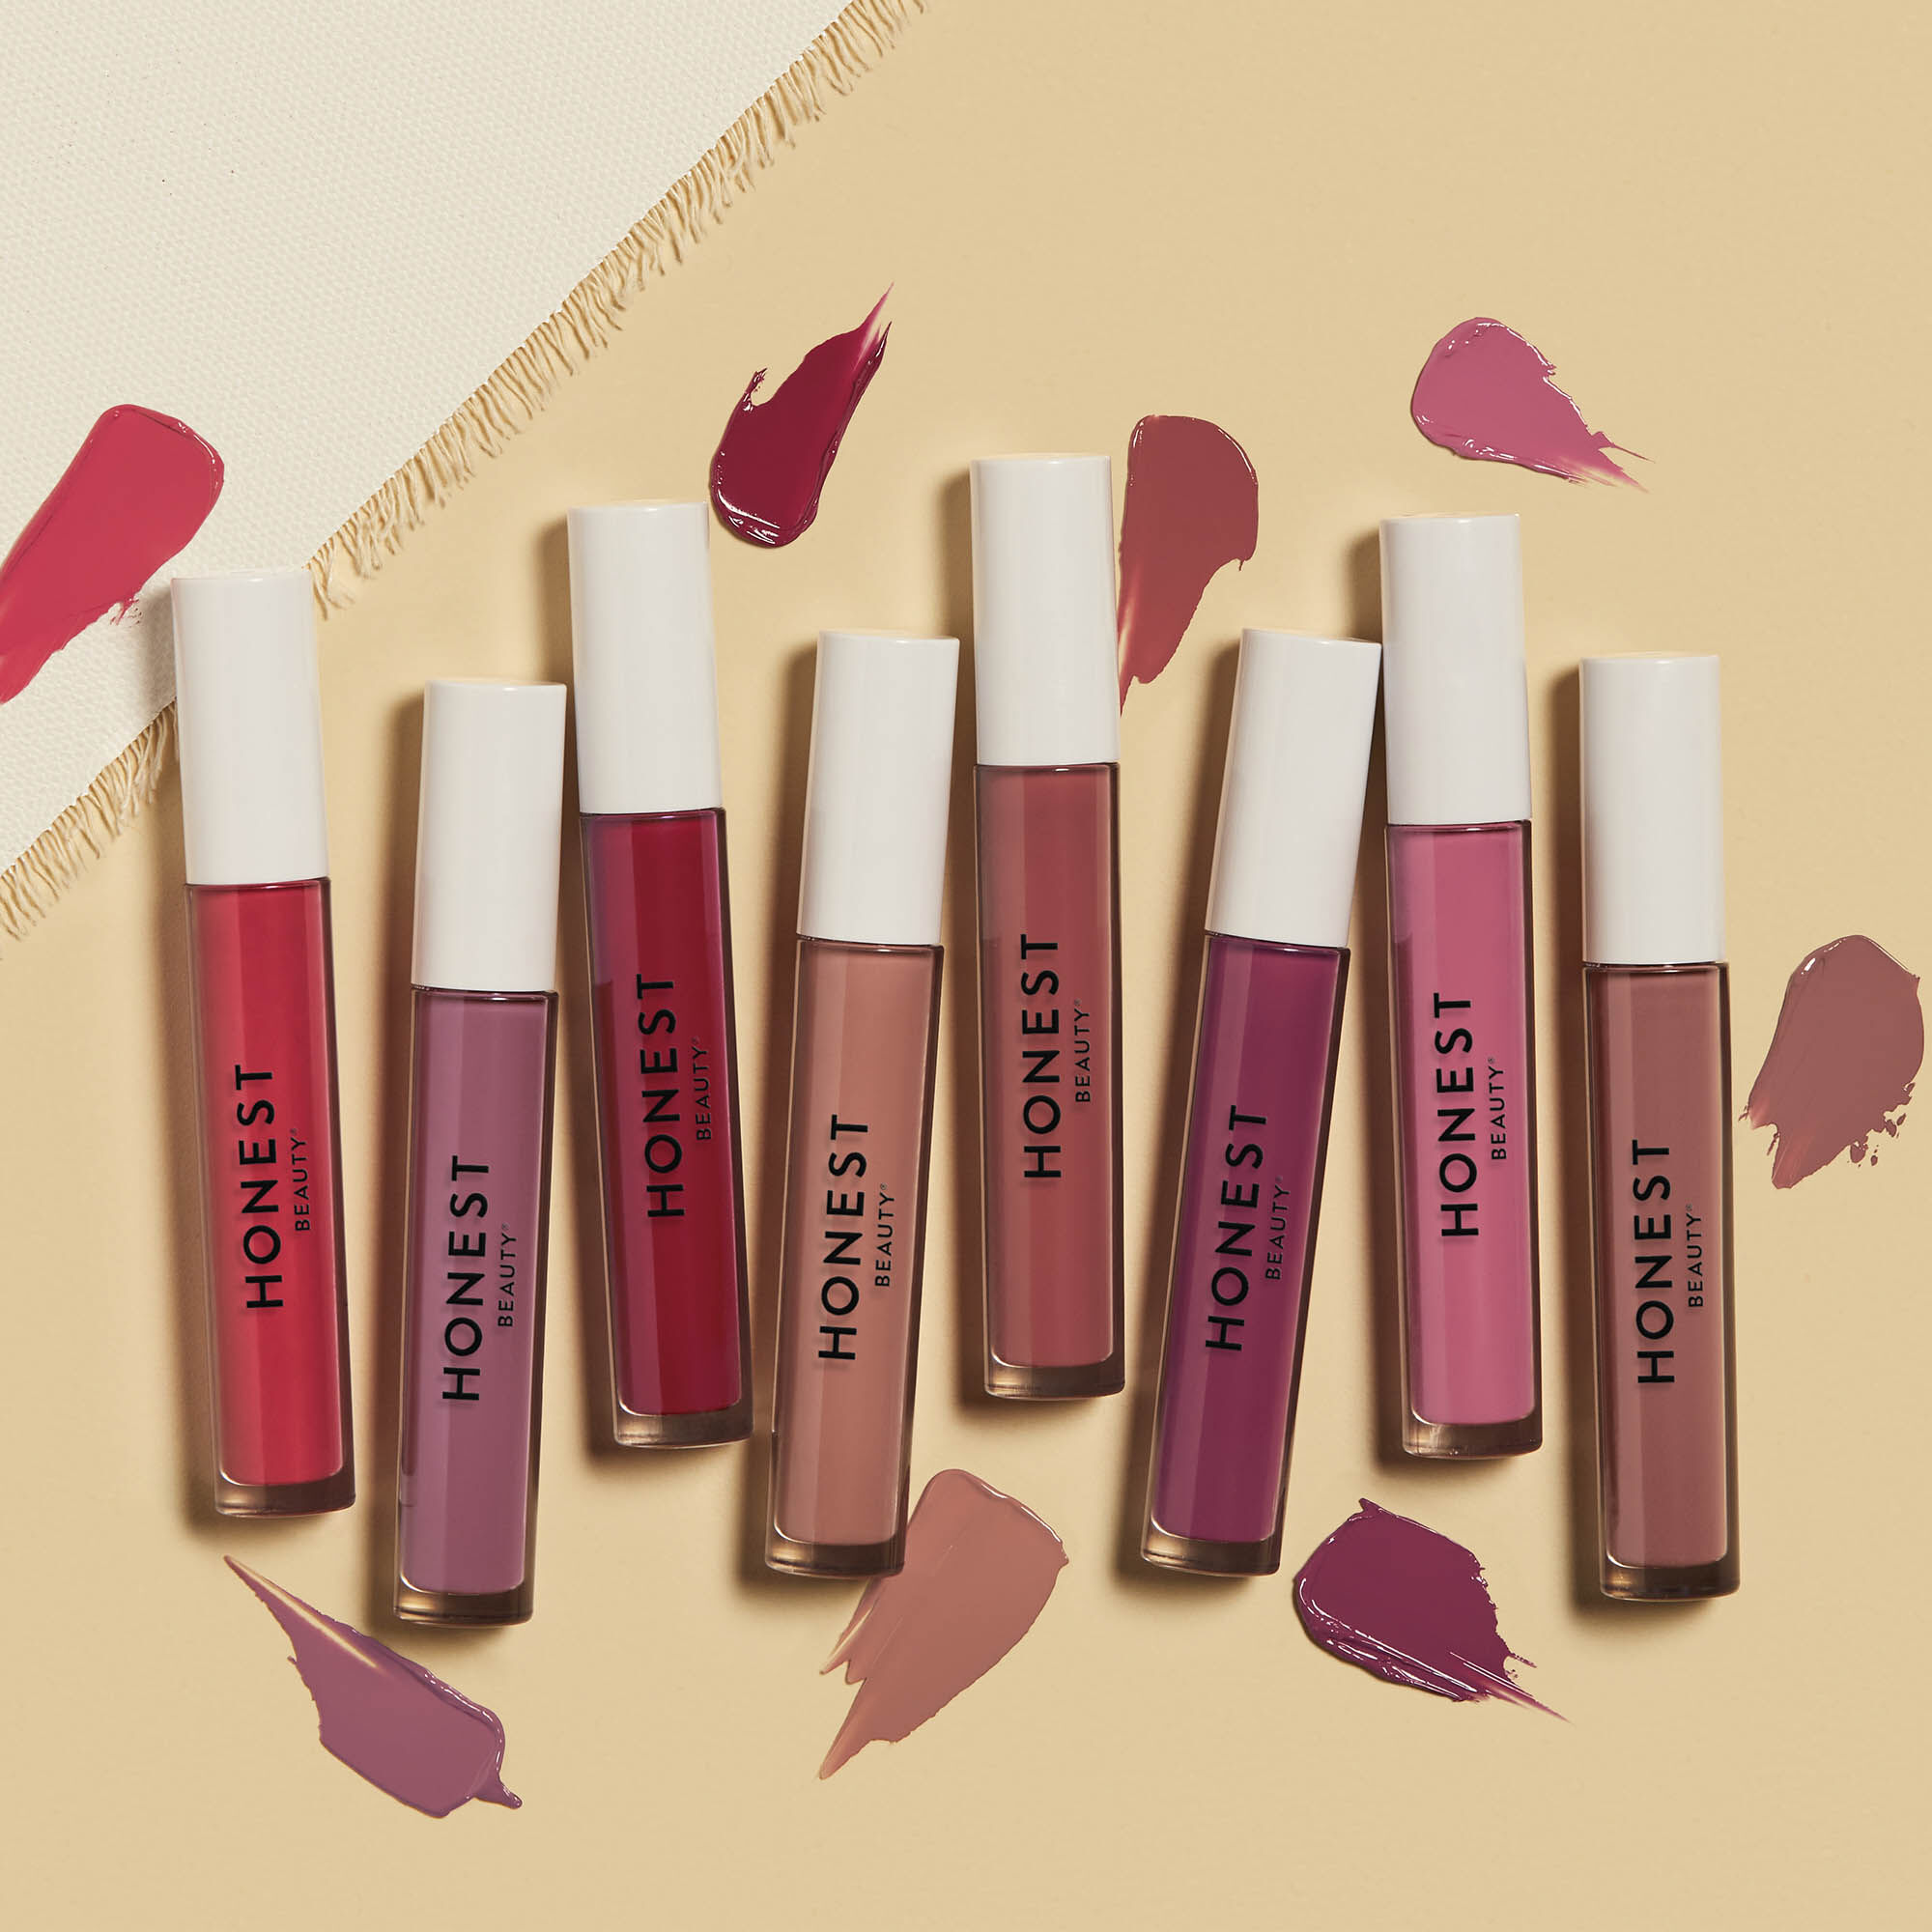 An Honest Review of the New Hermès Beauty Lipsticks